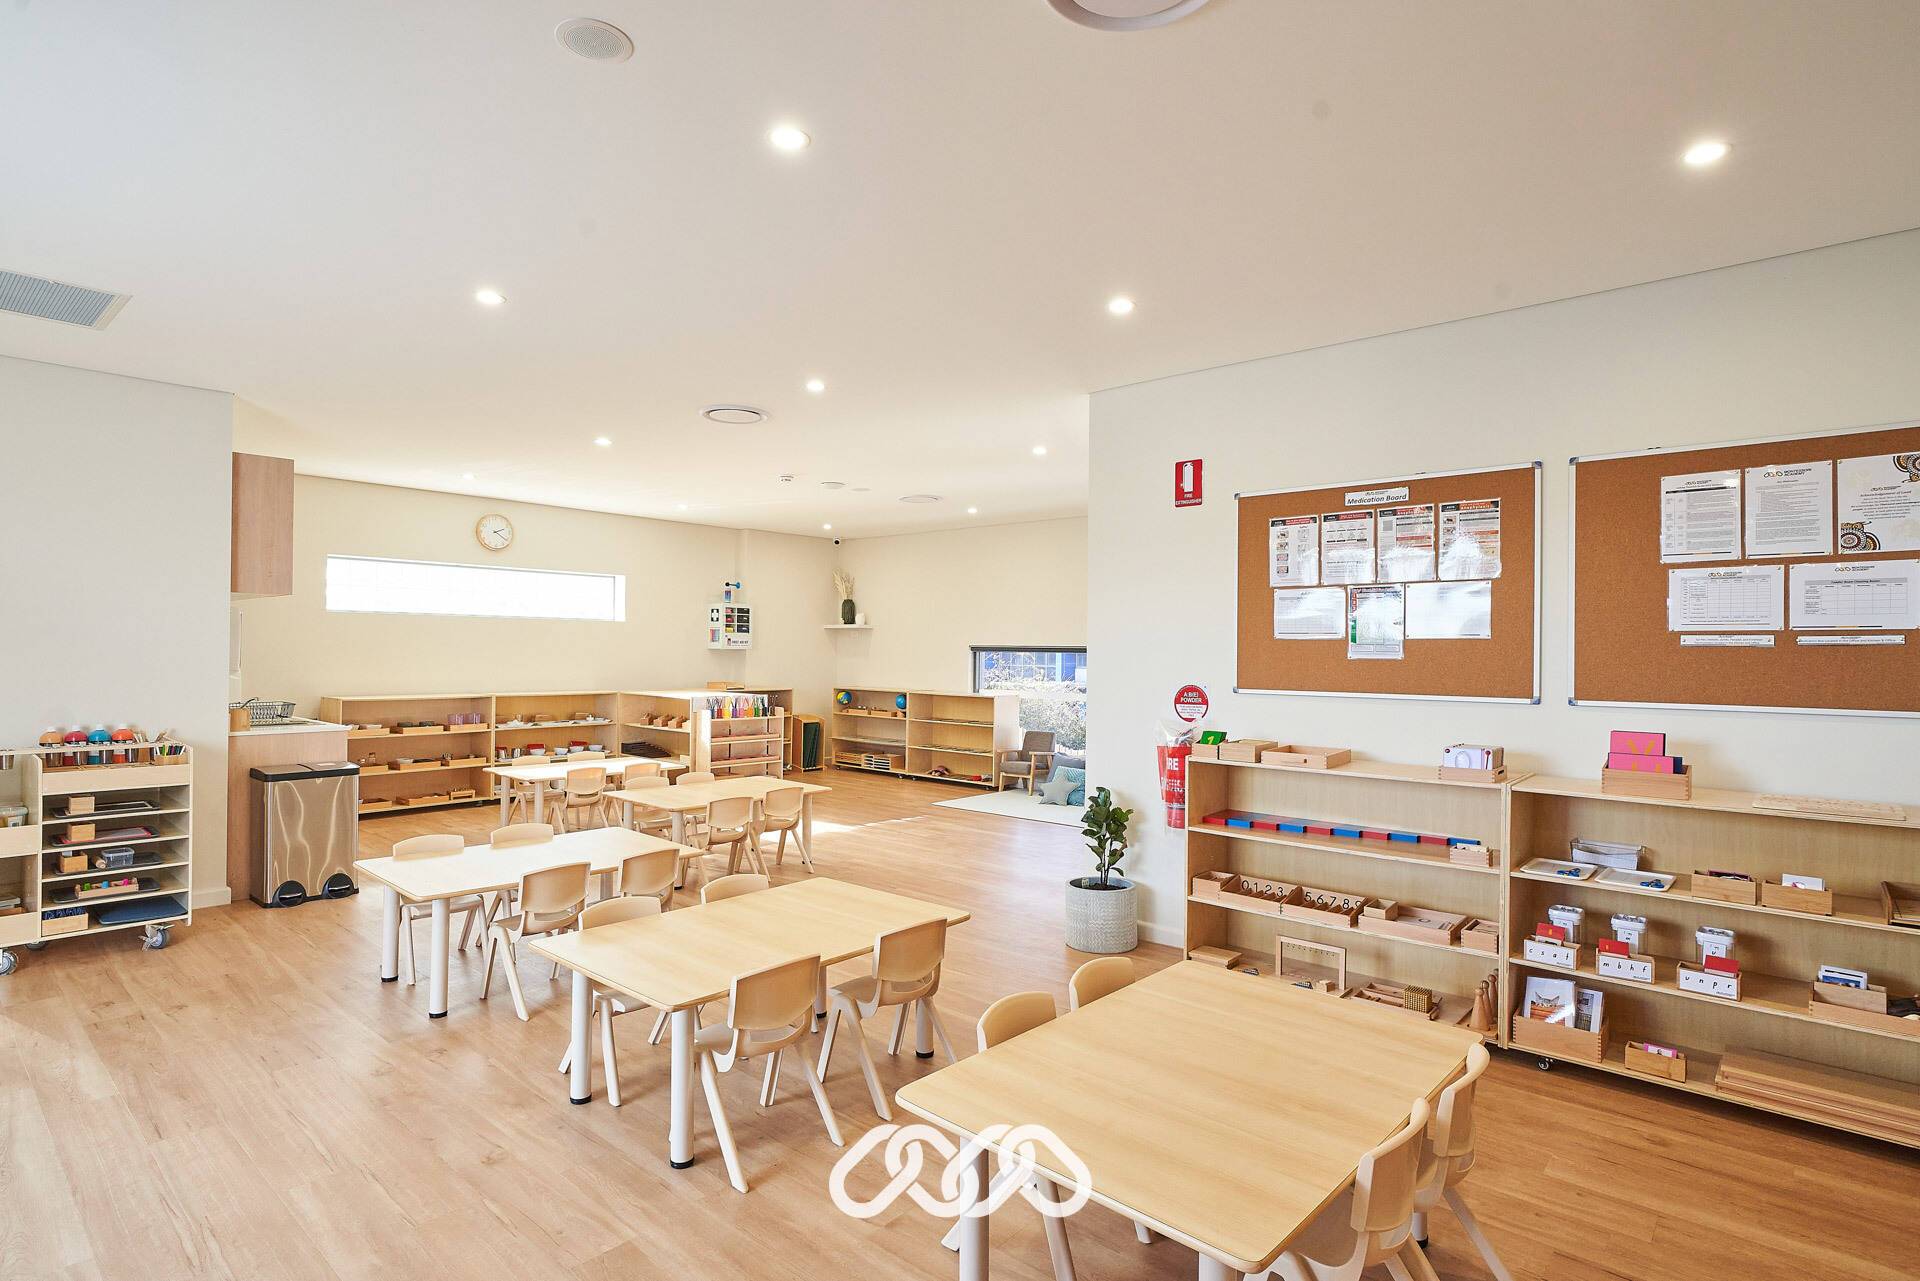 Narellan Central Montessori Academy